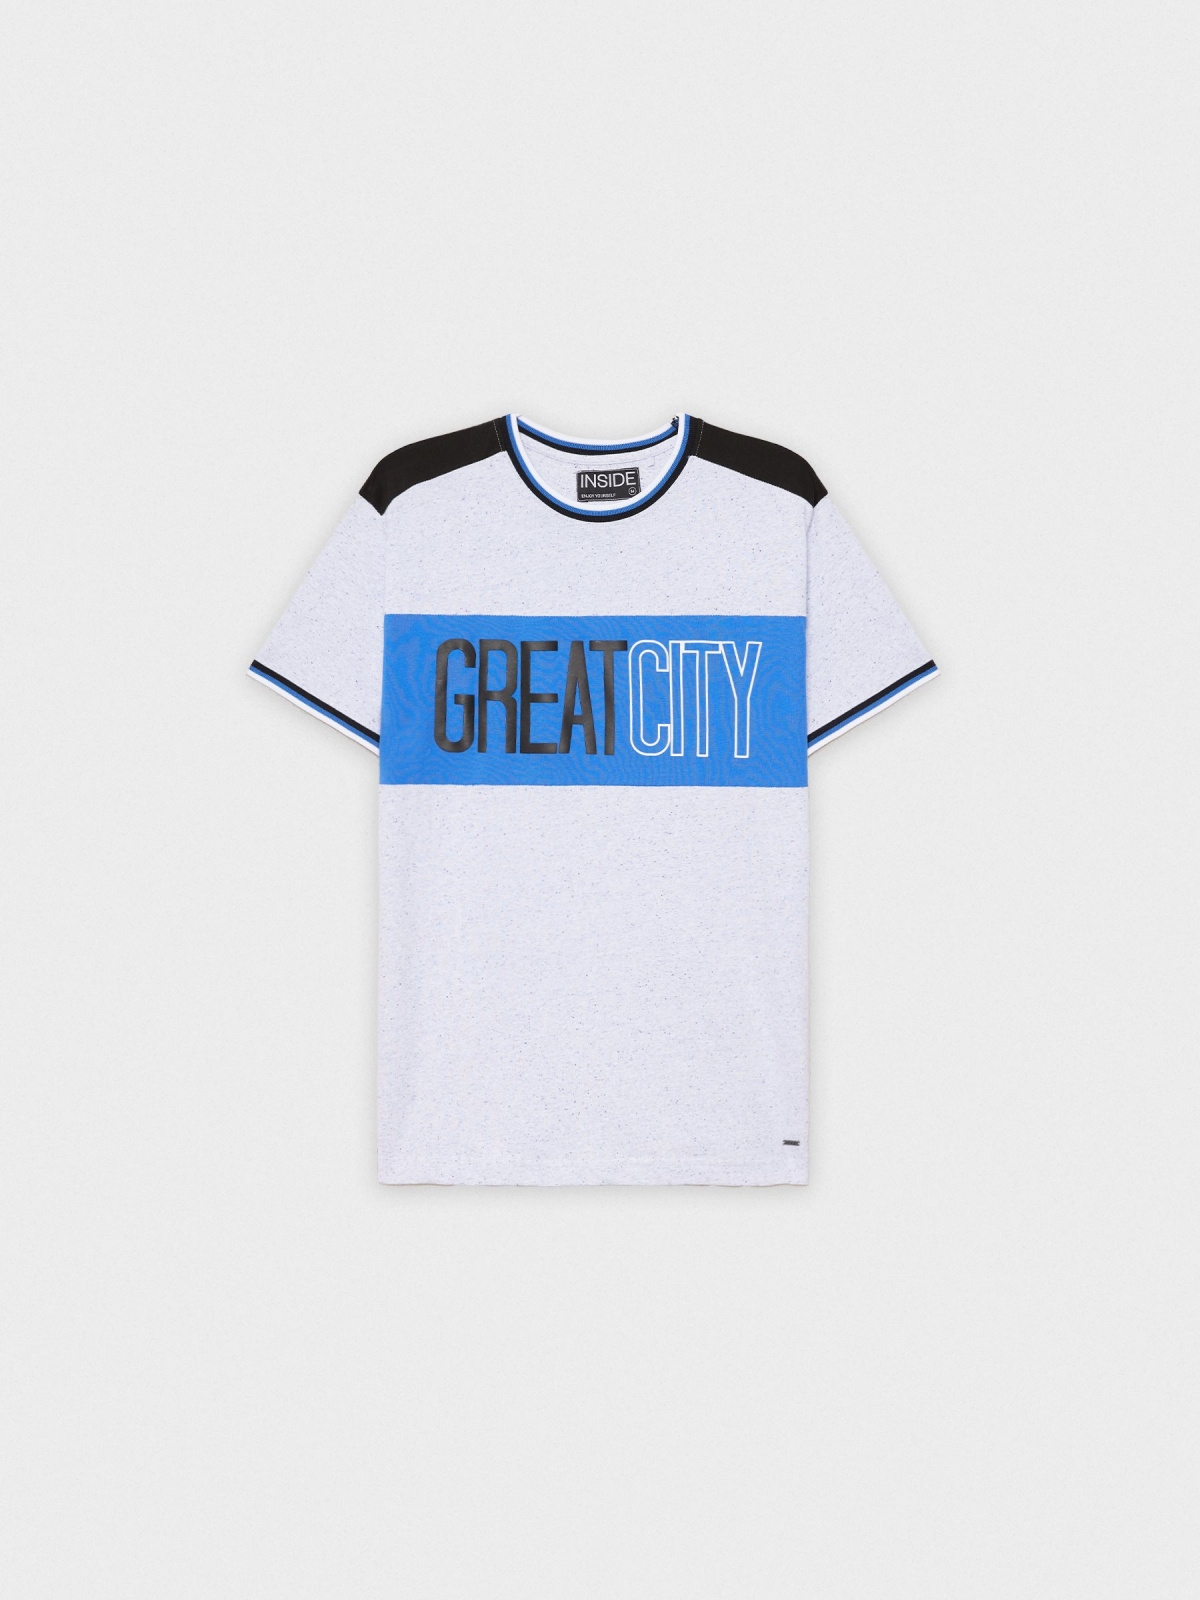  Greatcity T-shirt white